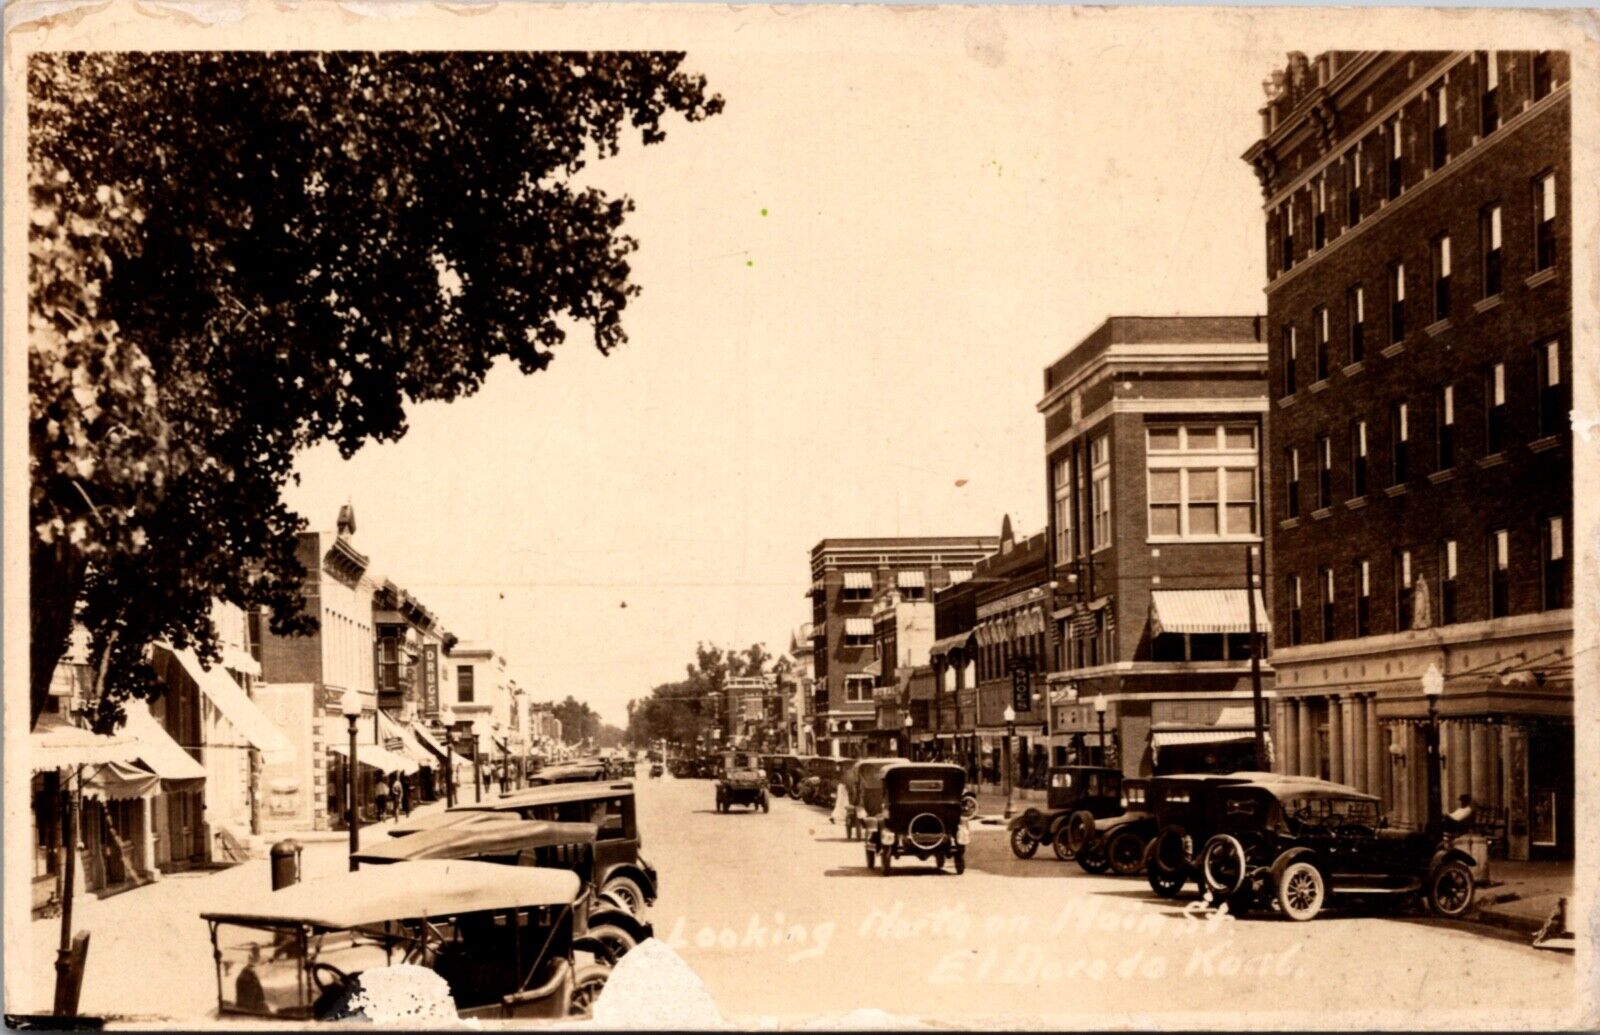 Real Photo Postcard Looking North on Main Street in El Dorado, Kansas